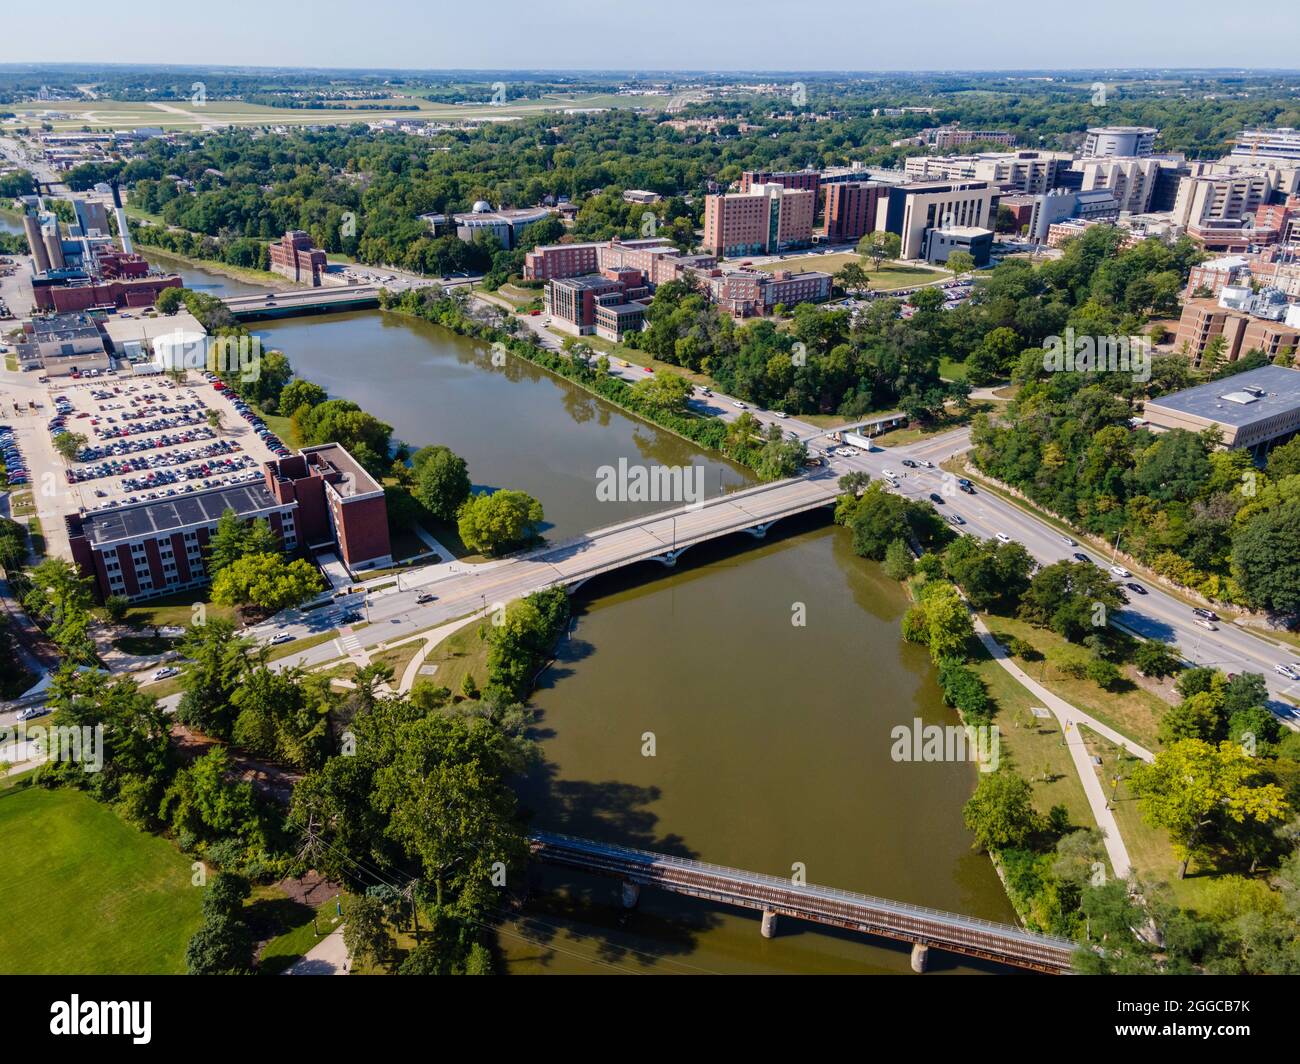 Aerial photograph of the beautiful University of Iowa campus and environs, Iowa City, Iowa, USA. Stock Photo